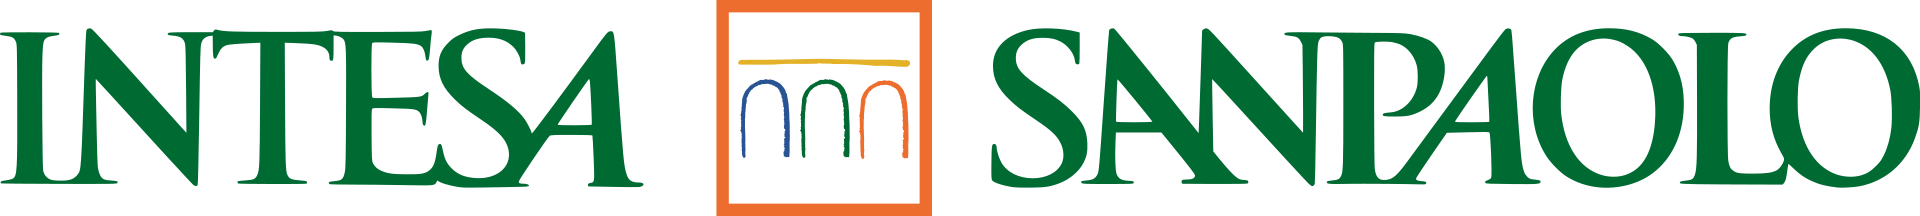 1920px-Intesa_Sanpaolo_logo.svg